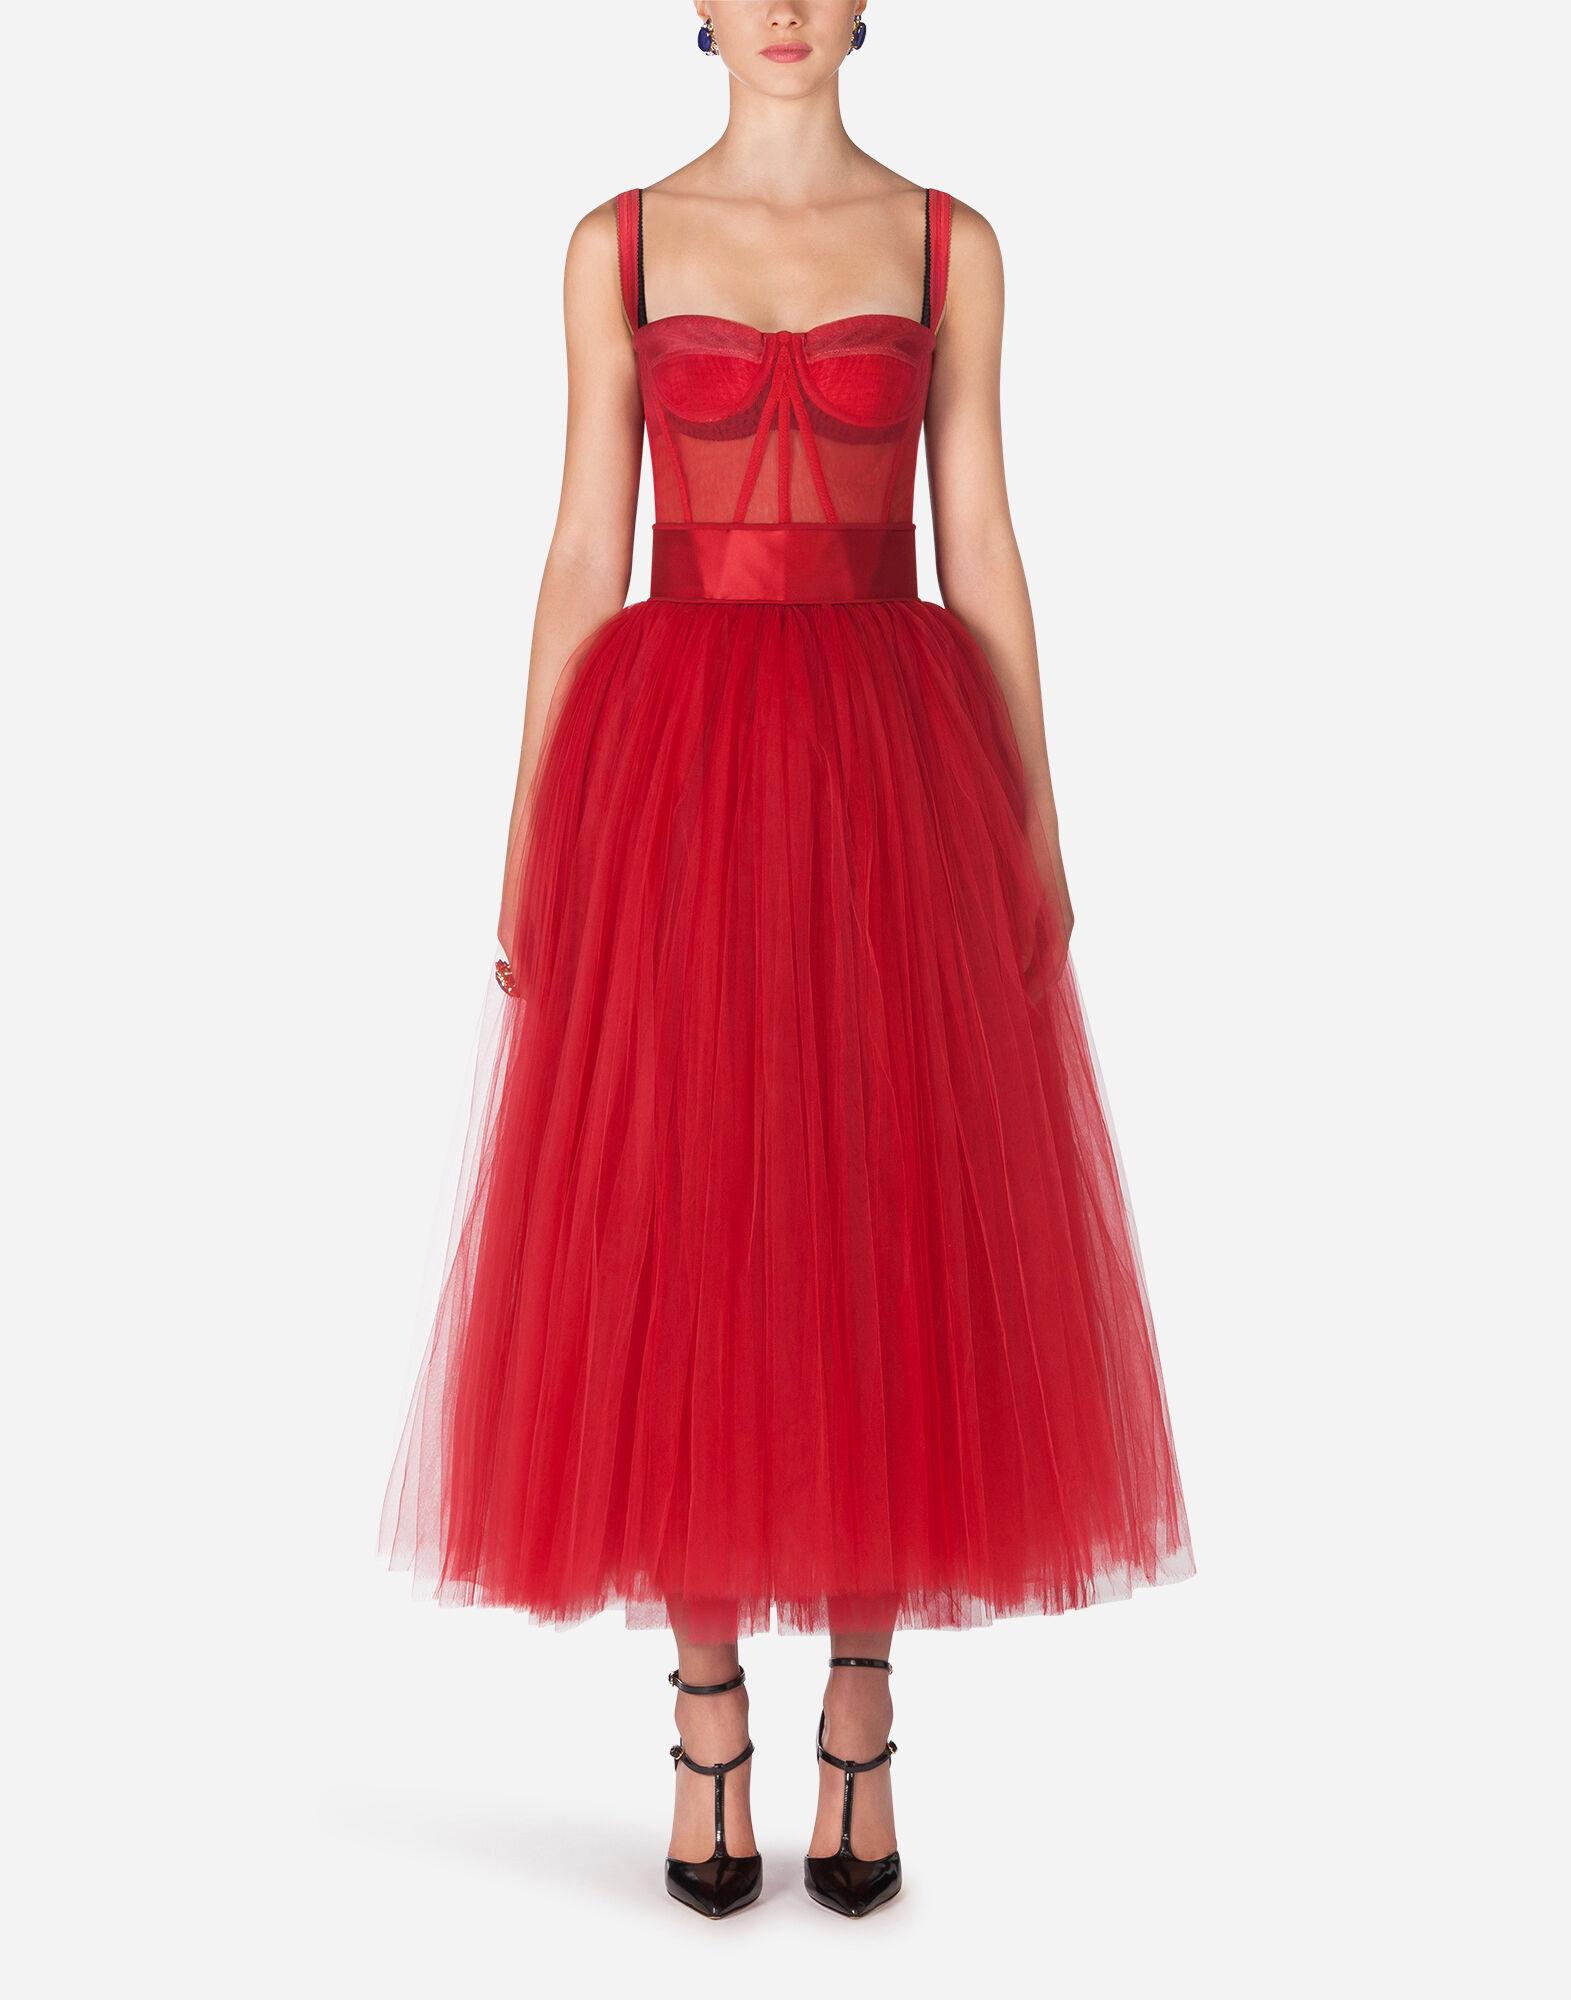 Dolce & Gabbana Bustier Tulle Midi Dress in Red - Lyst